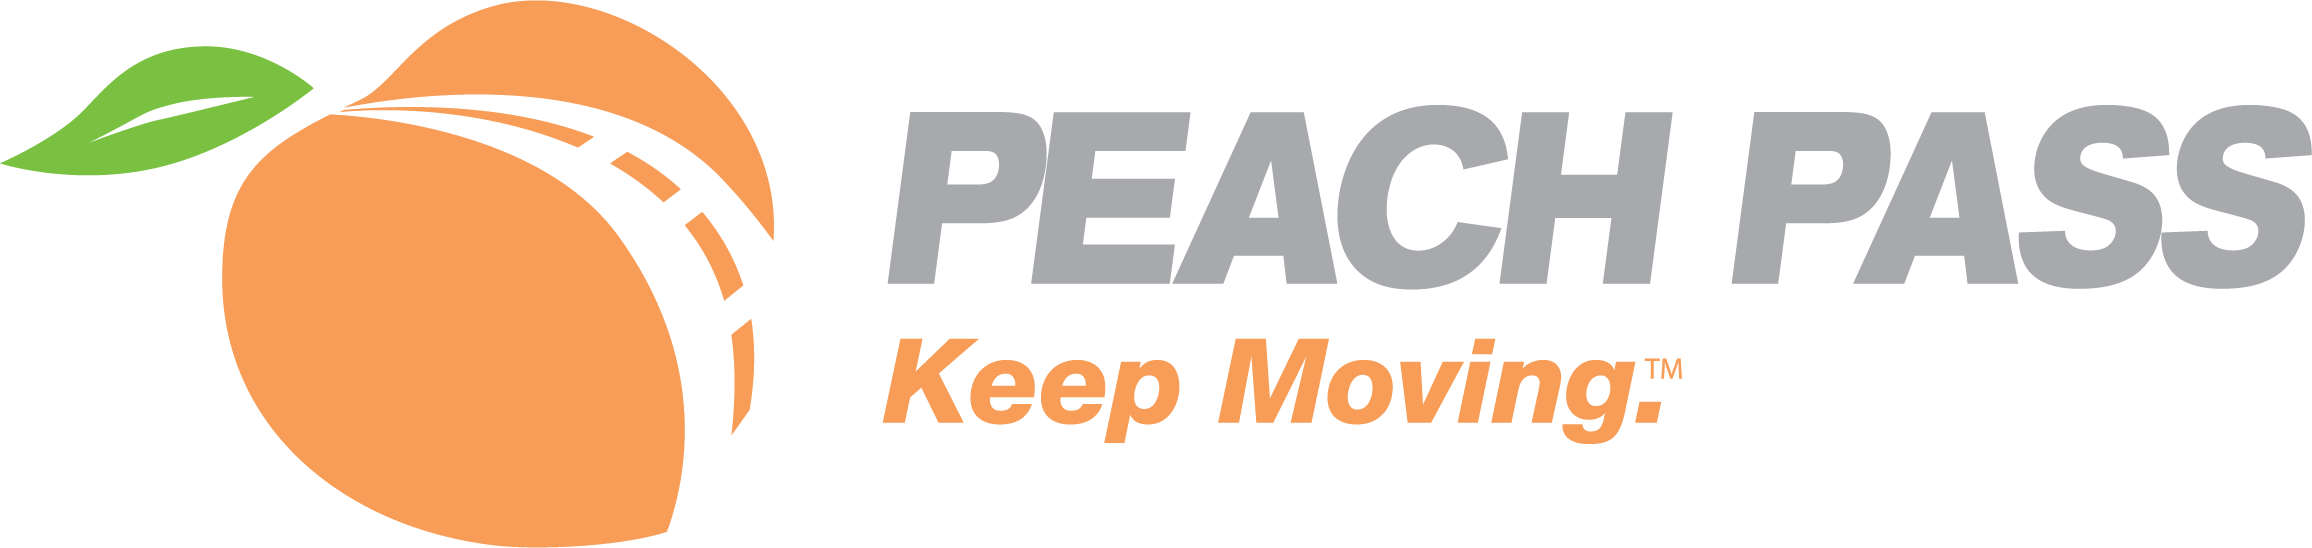 Home Peach Pass Keep Moving